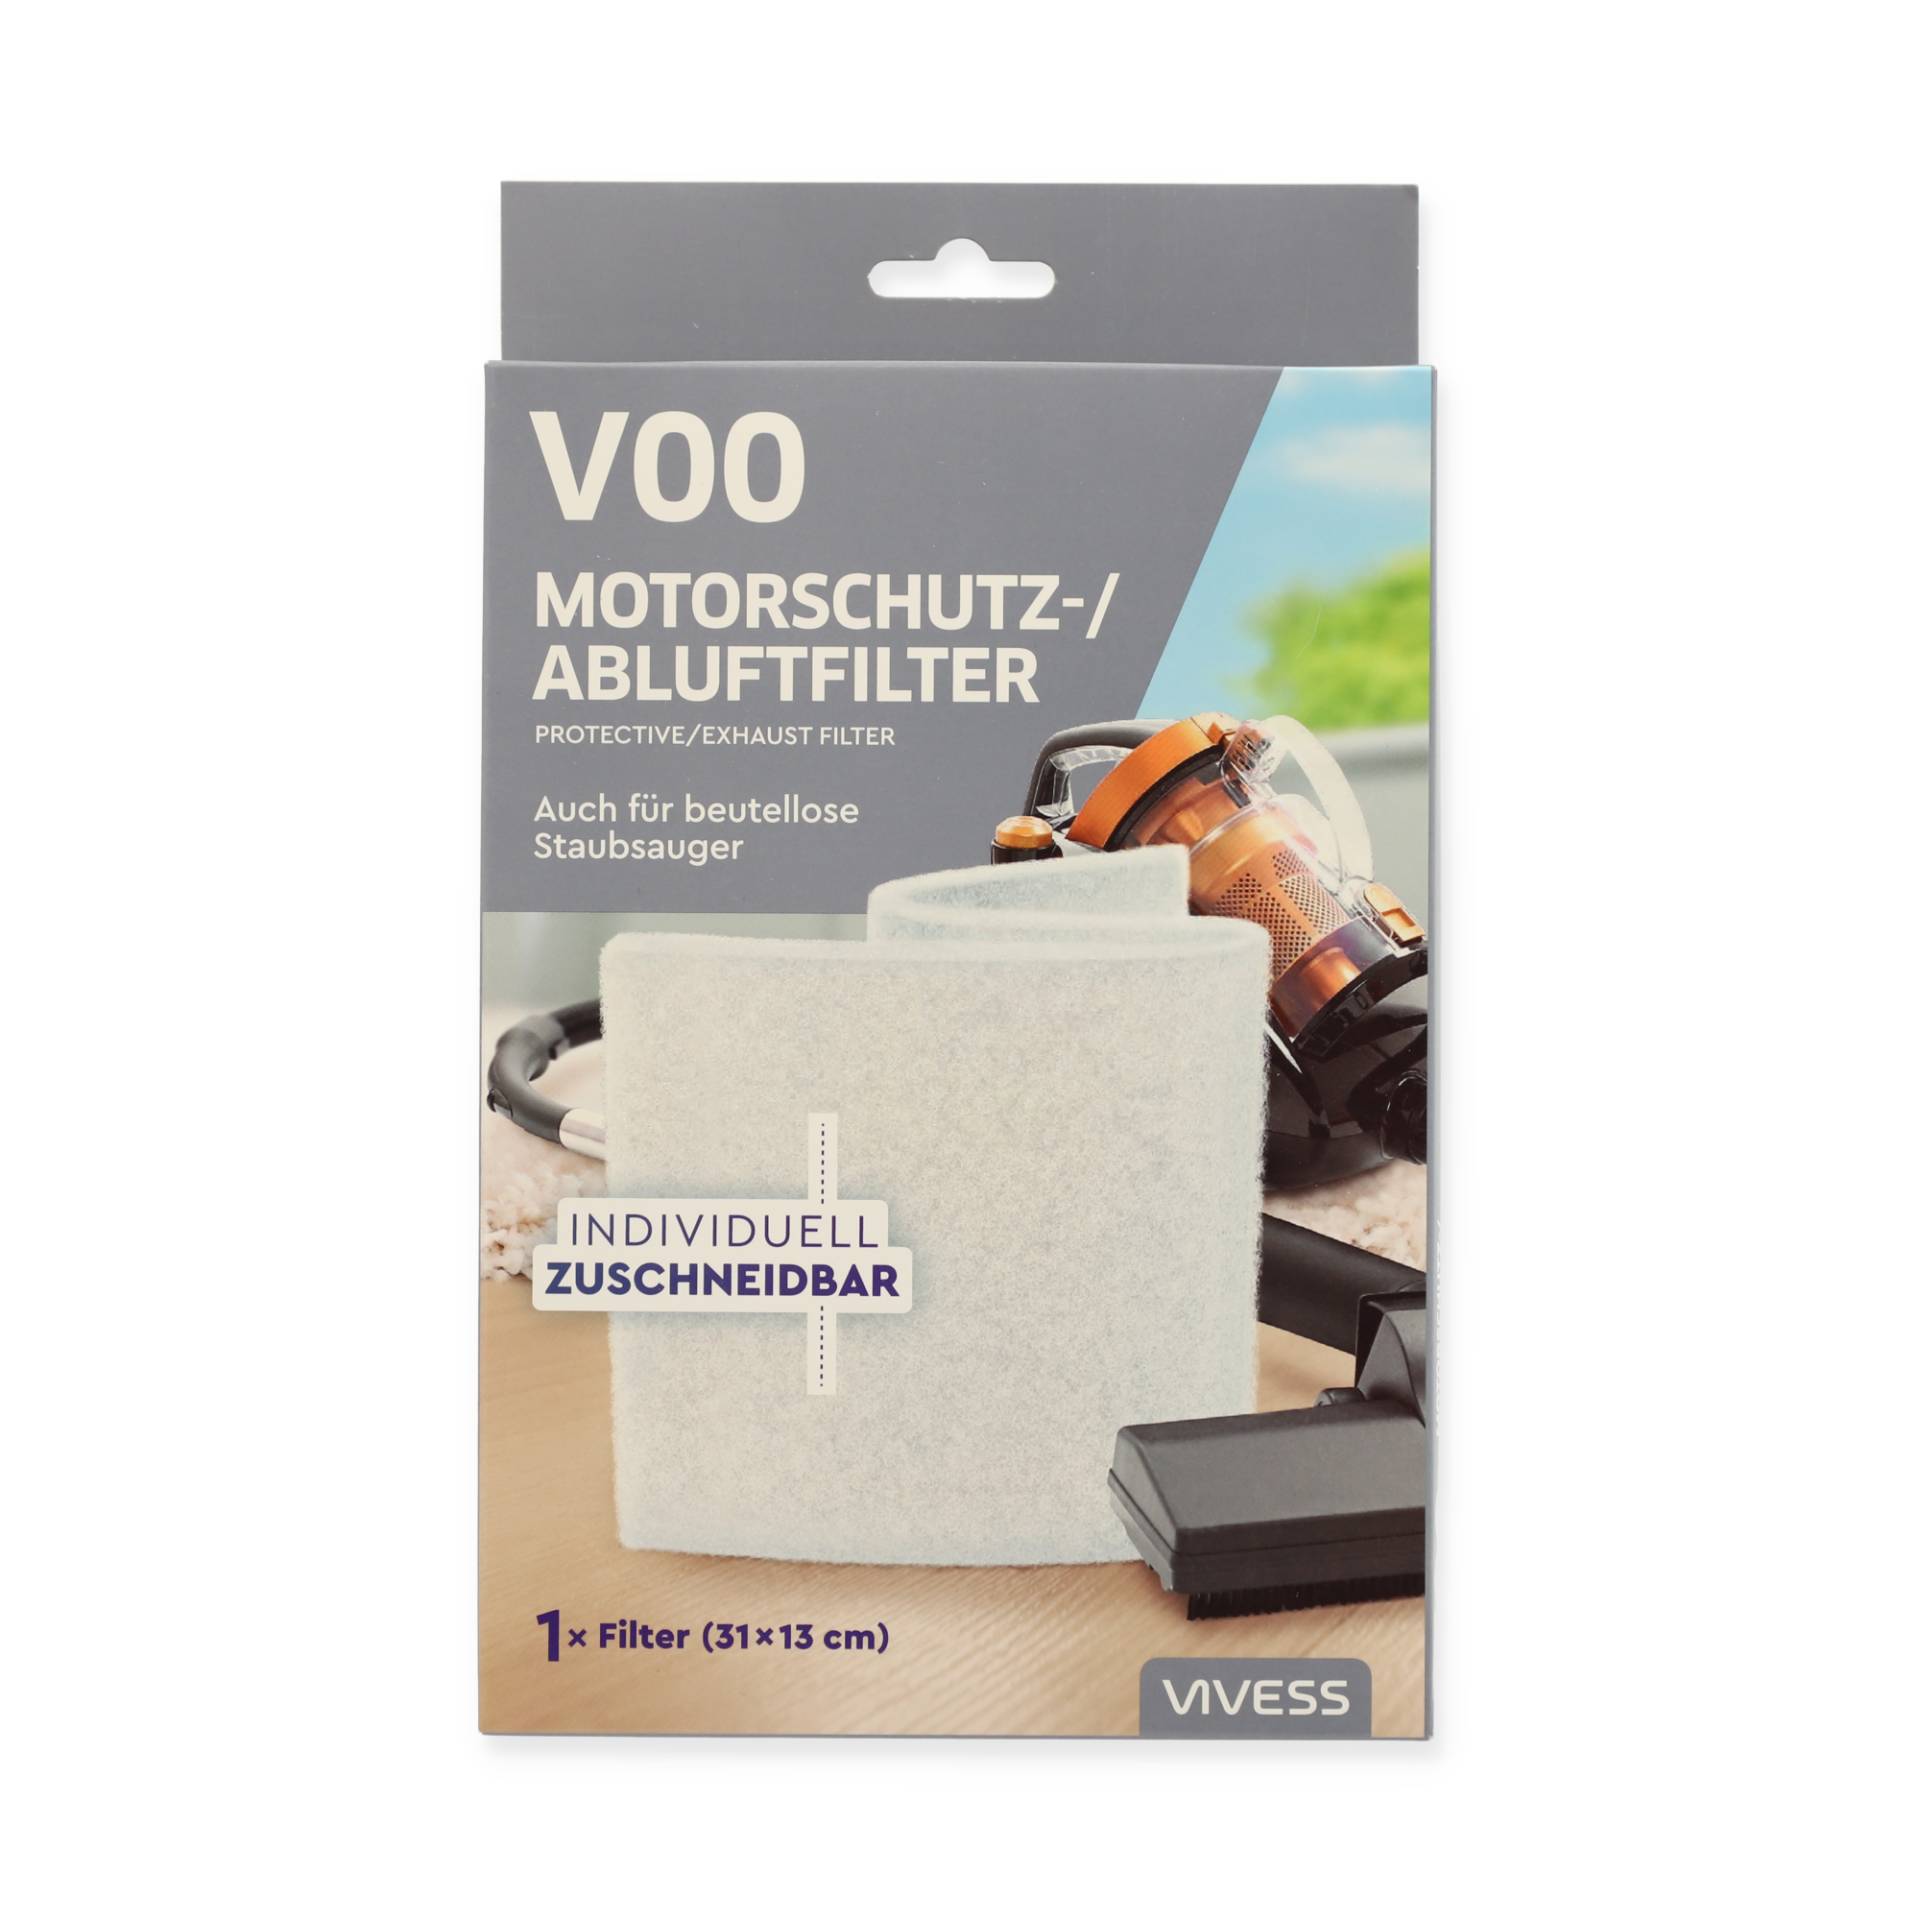 Vivess Motorschutz-/Abluftfilter 'V00' 1 Stück von Vivess